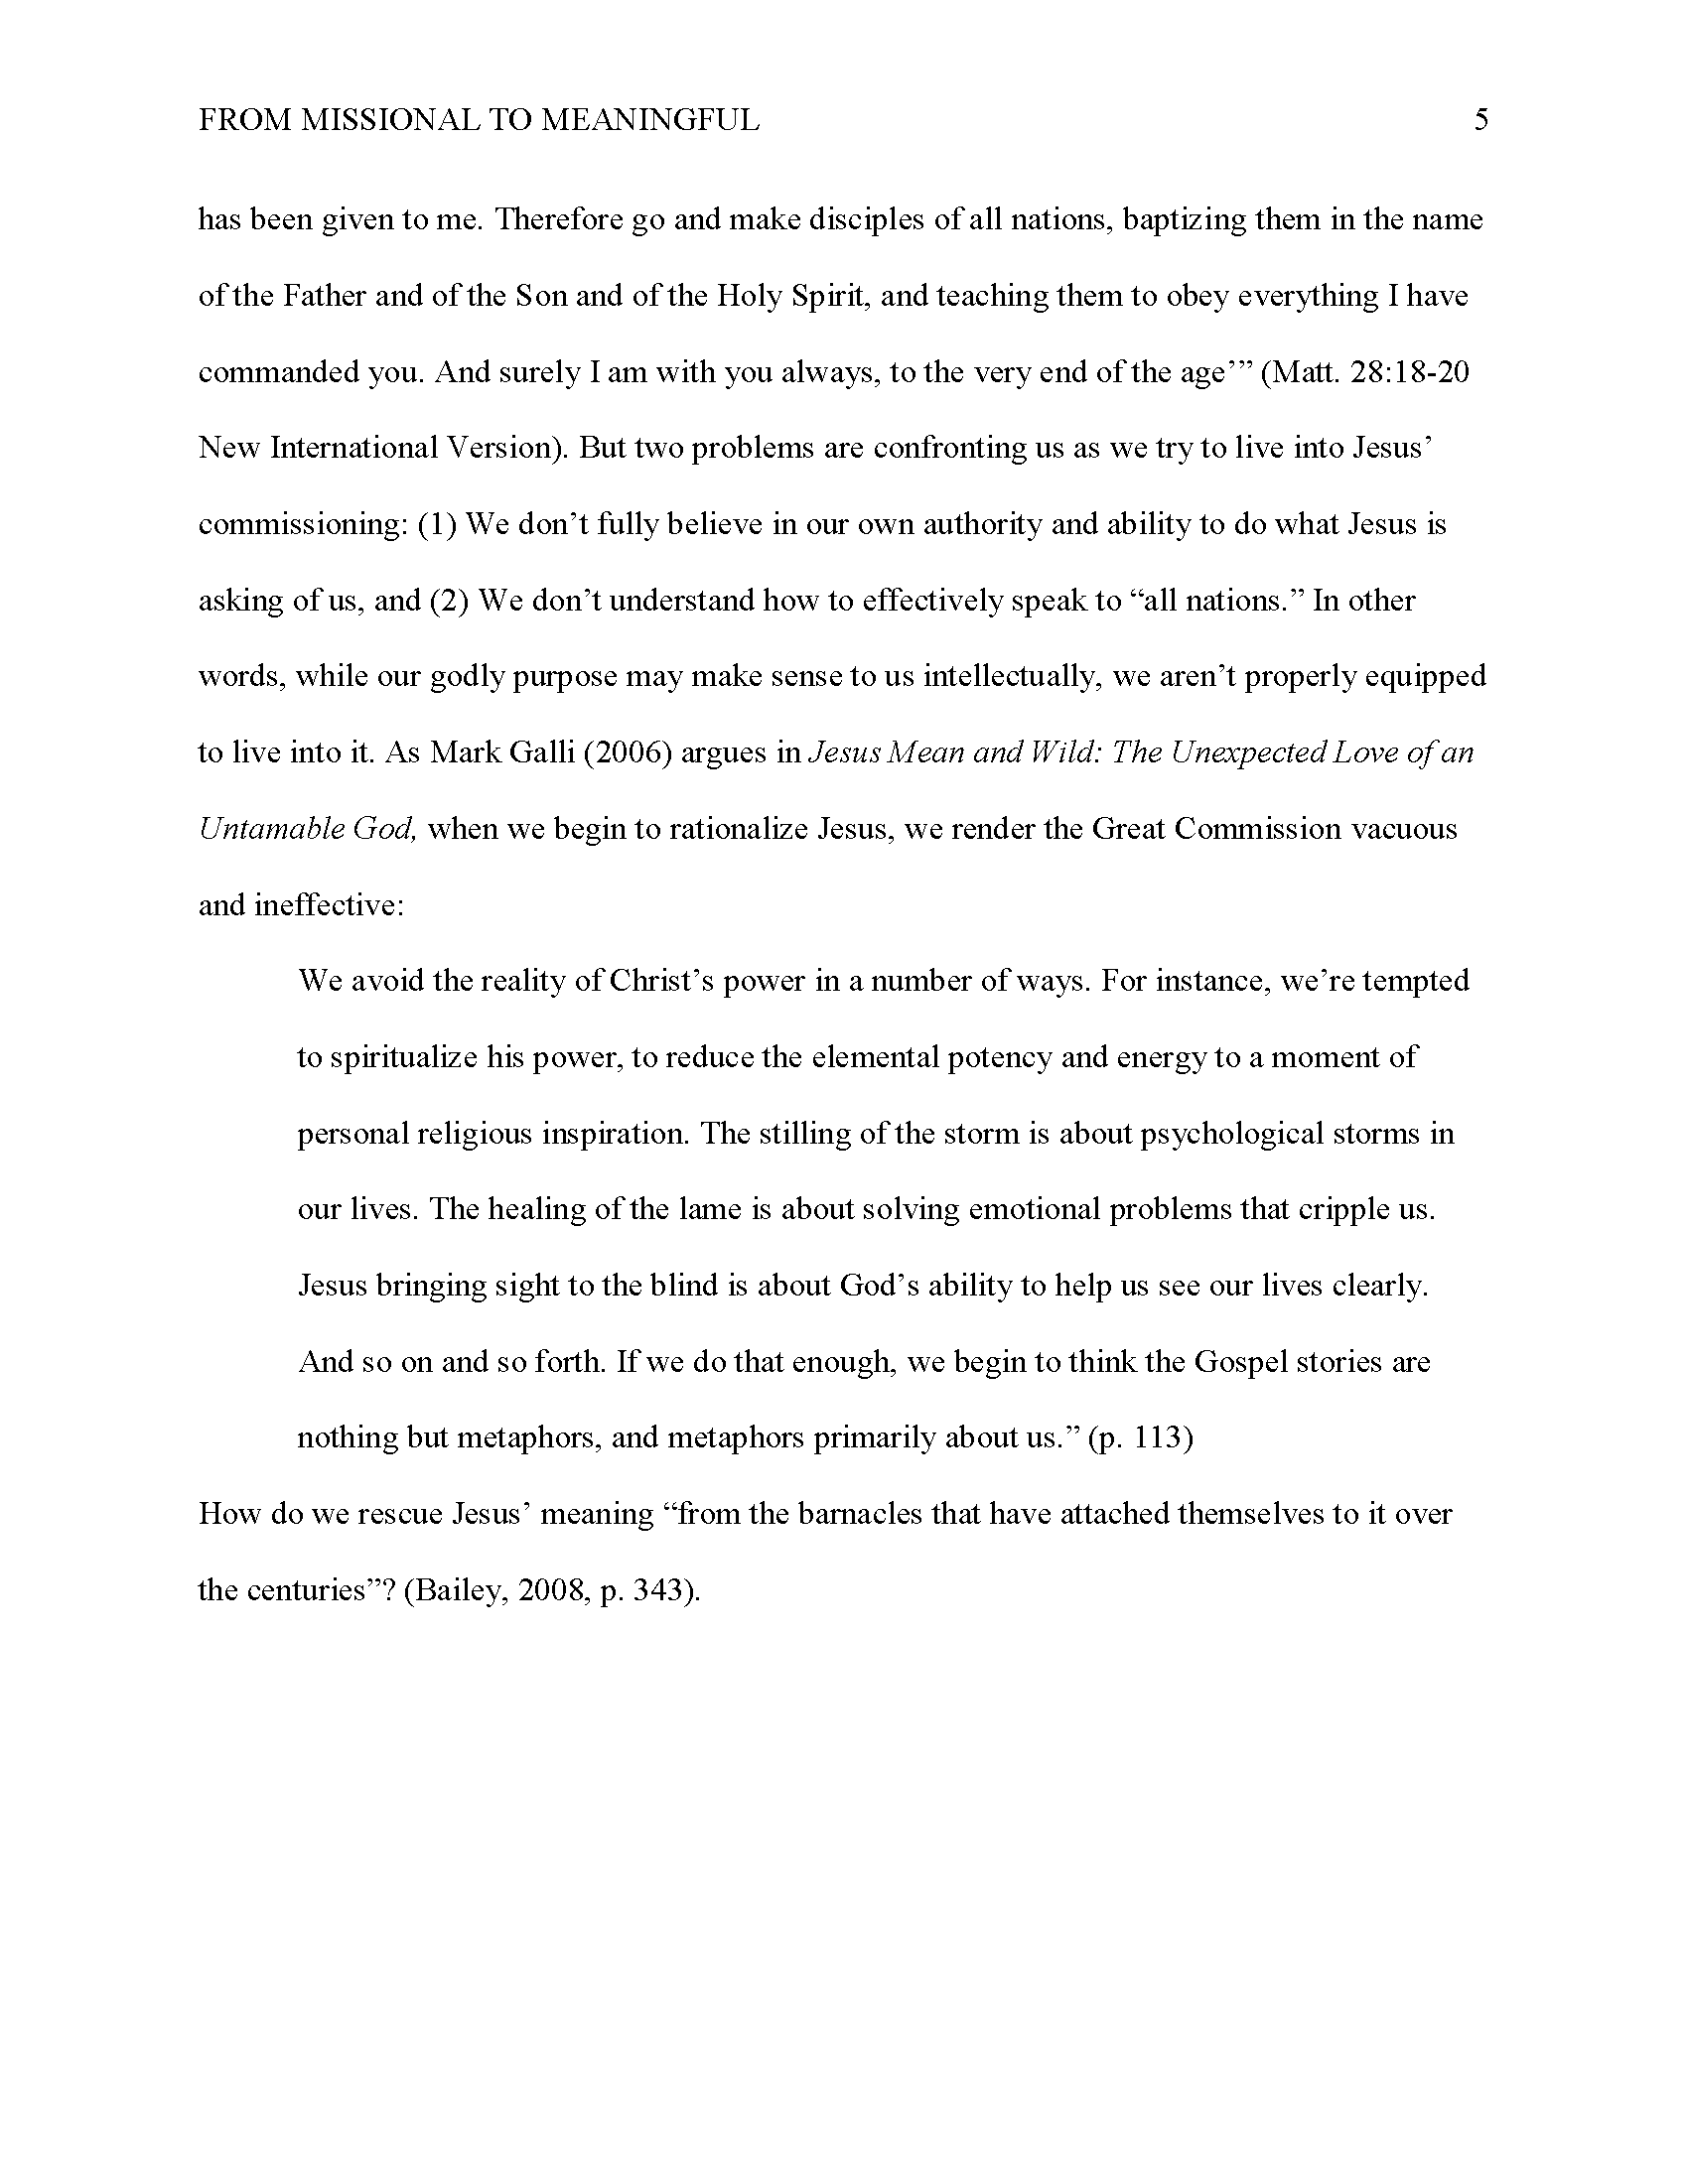 APA Essay Page 5